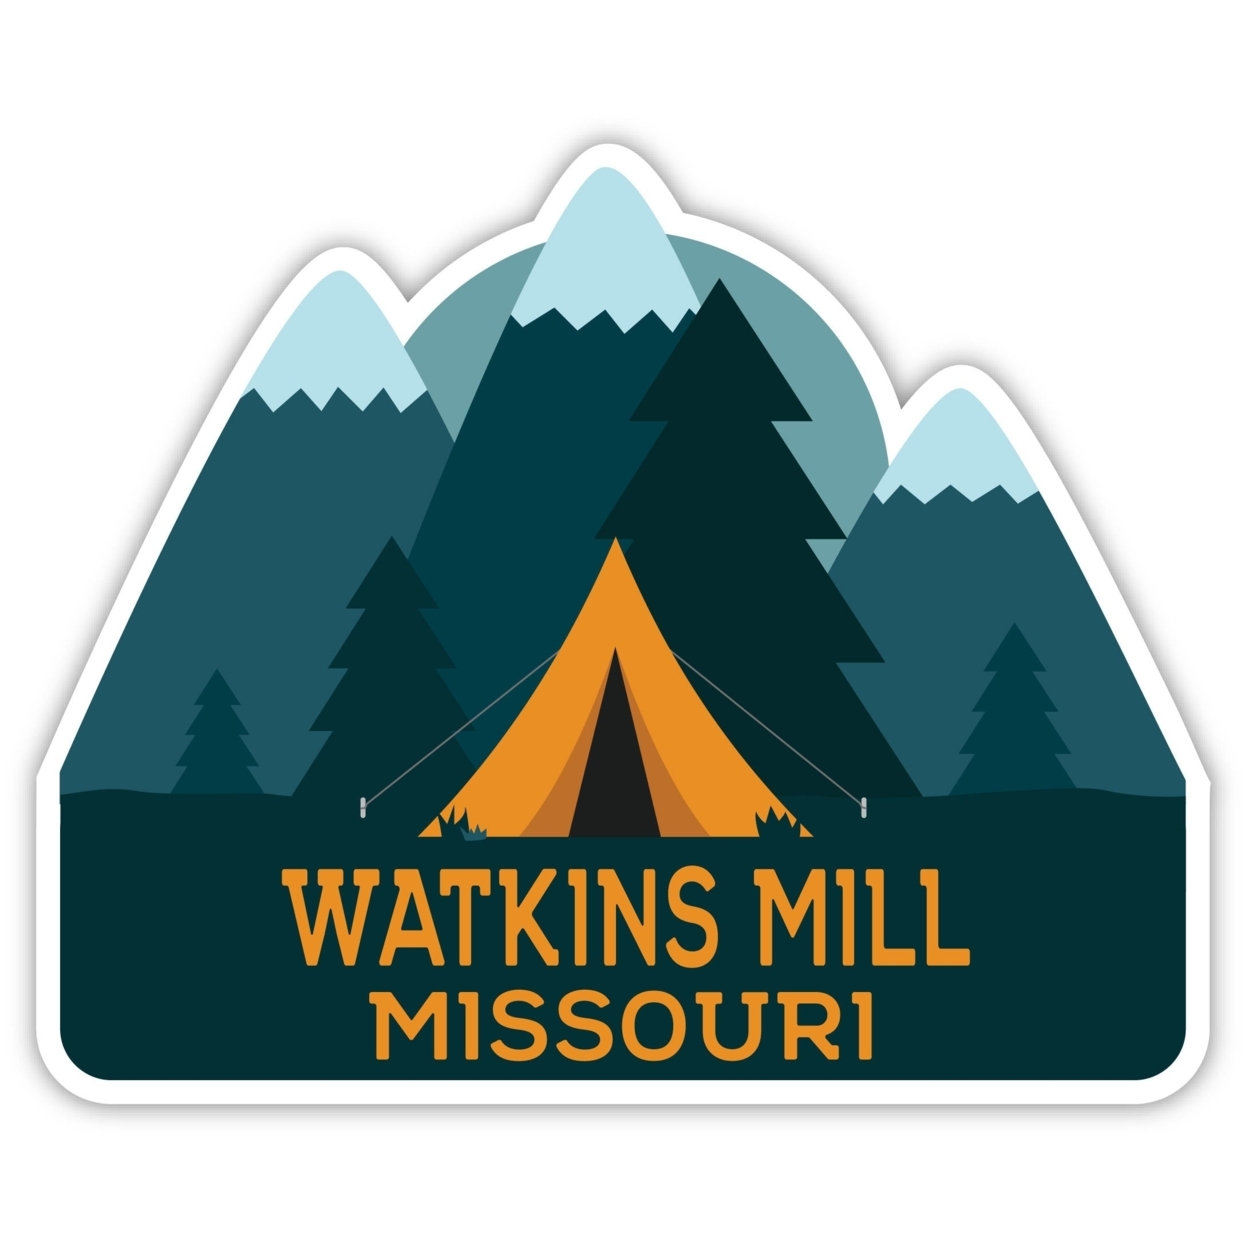 Watkins Mill Missouri Souvenir Decorative Stickers (Choose Theme And Size) - Single Unit, 4-Inch, Tent